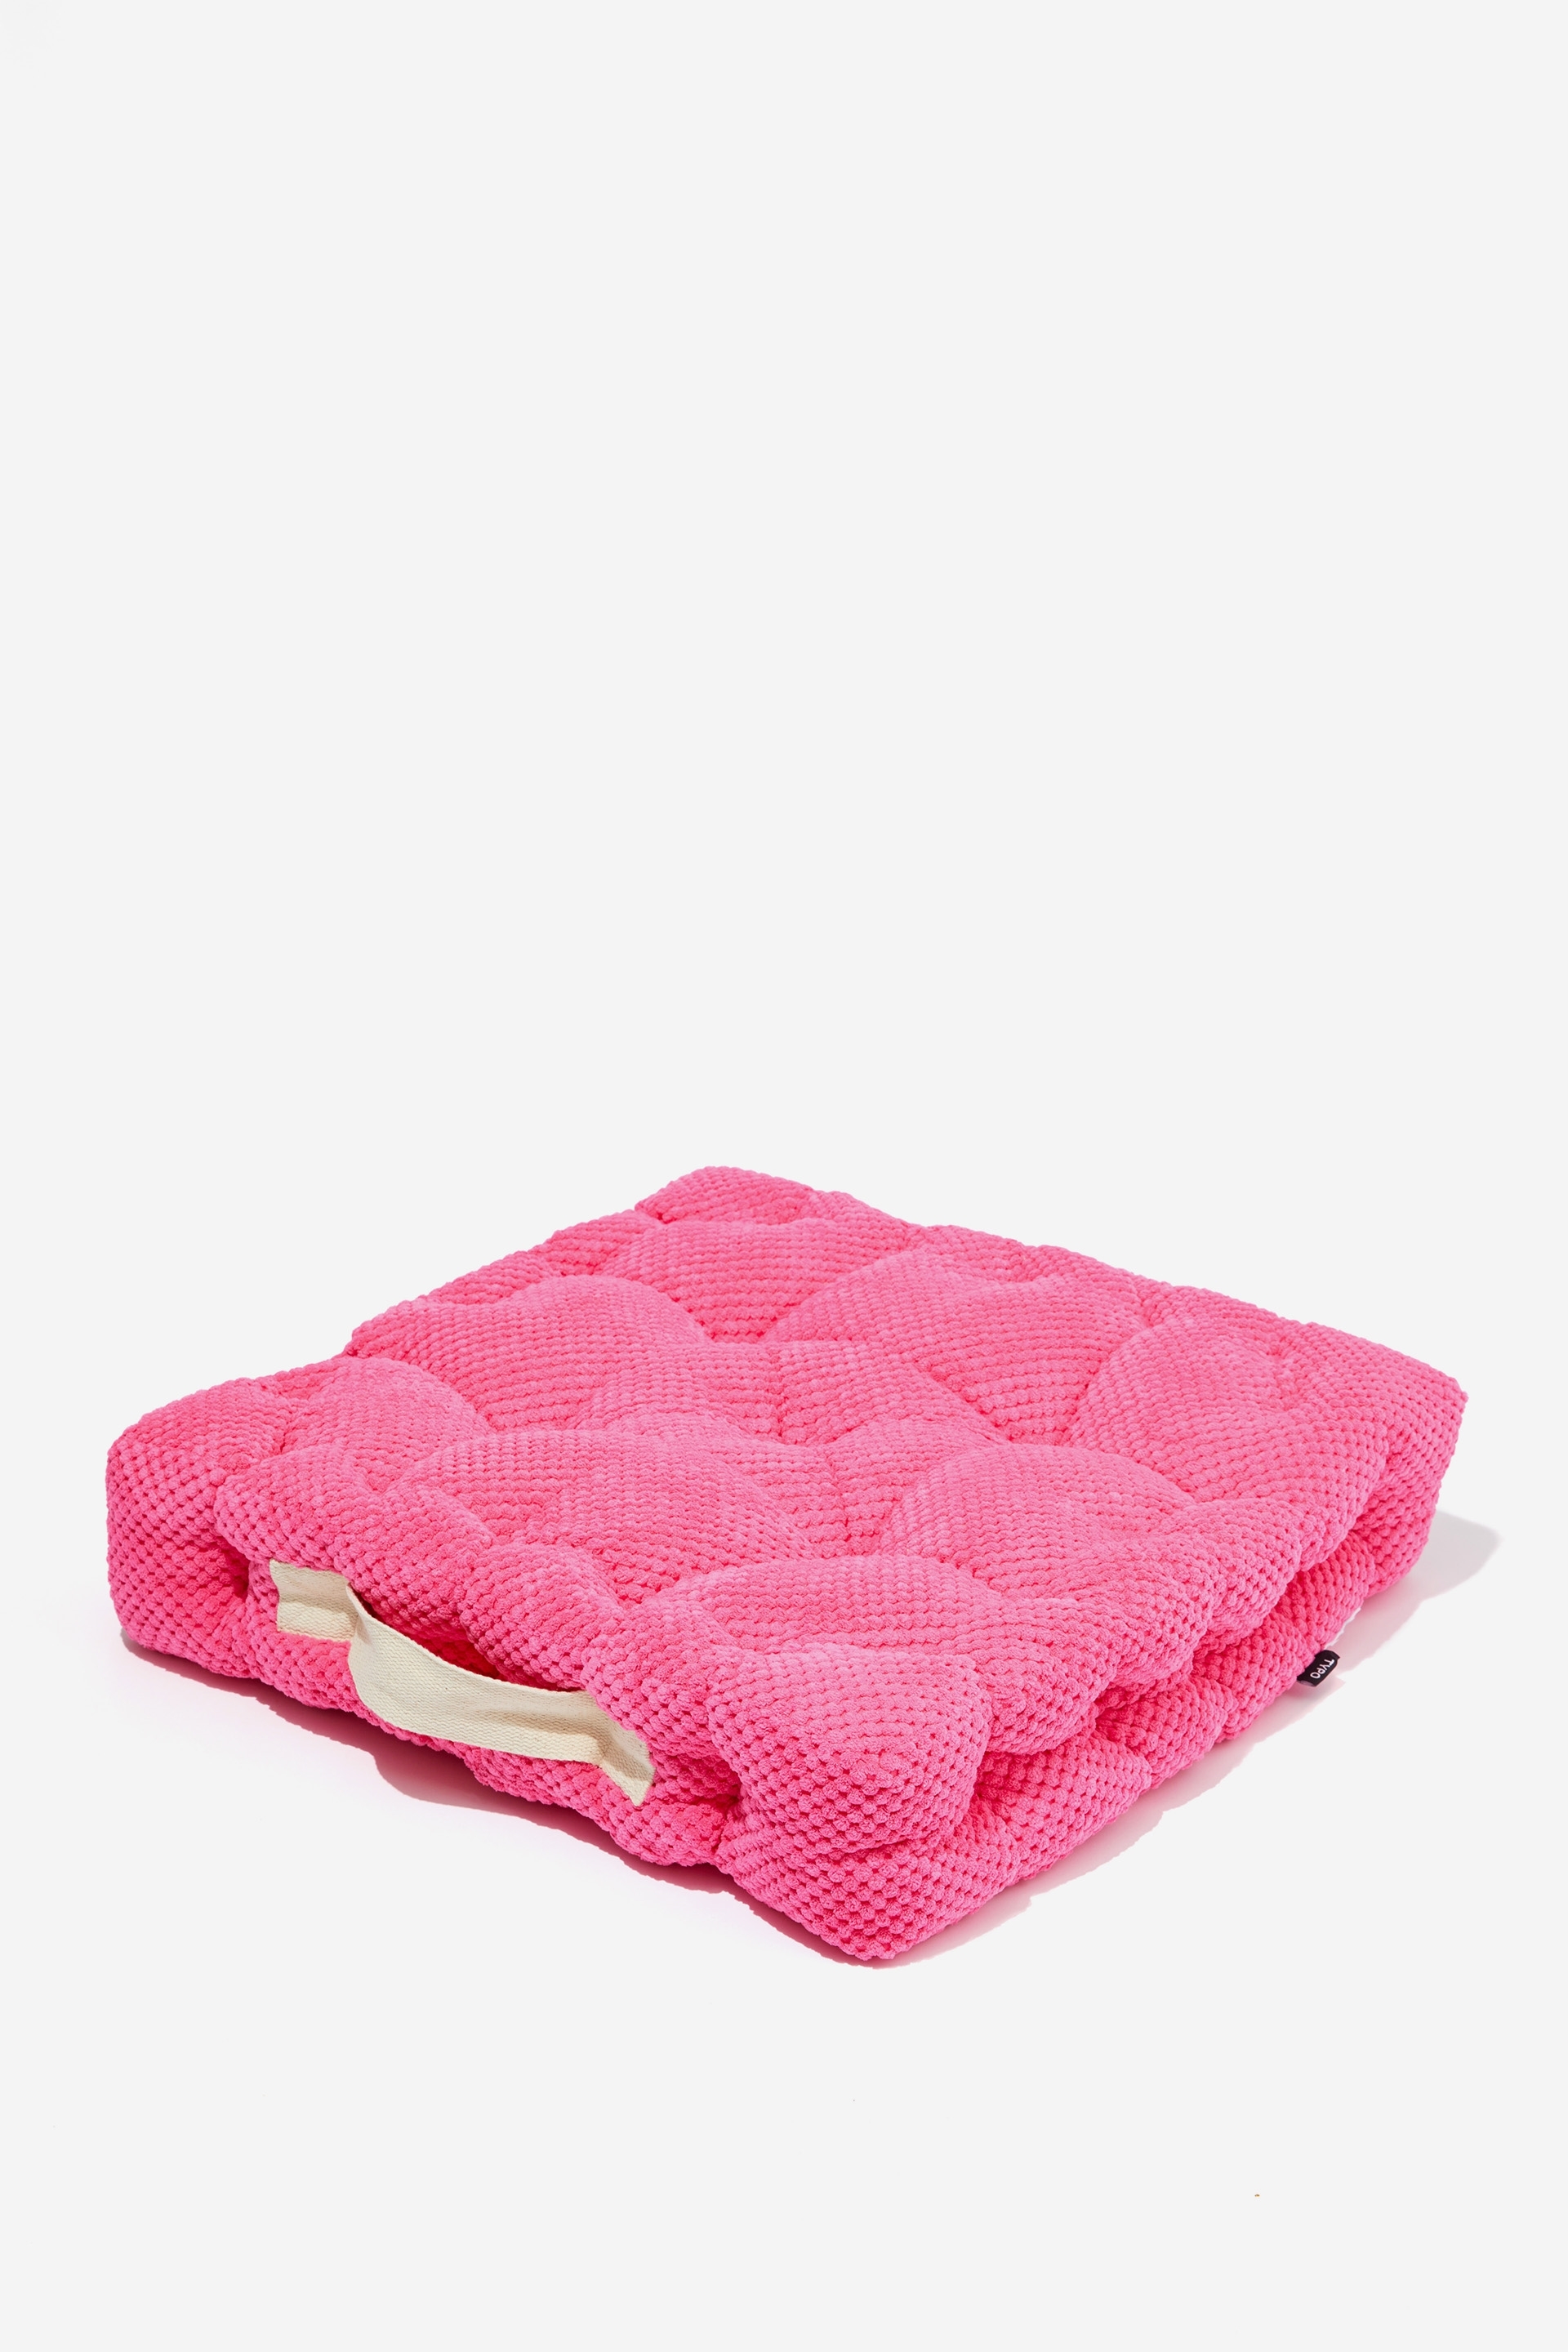 Typo - Floor Cushion - Pink flash check corduroy